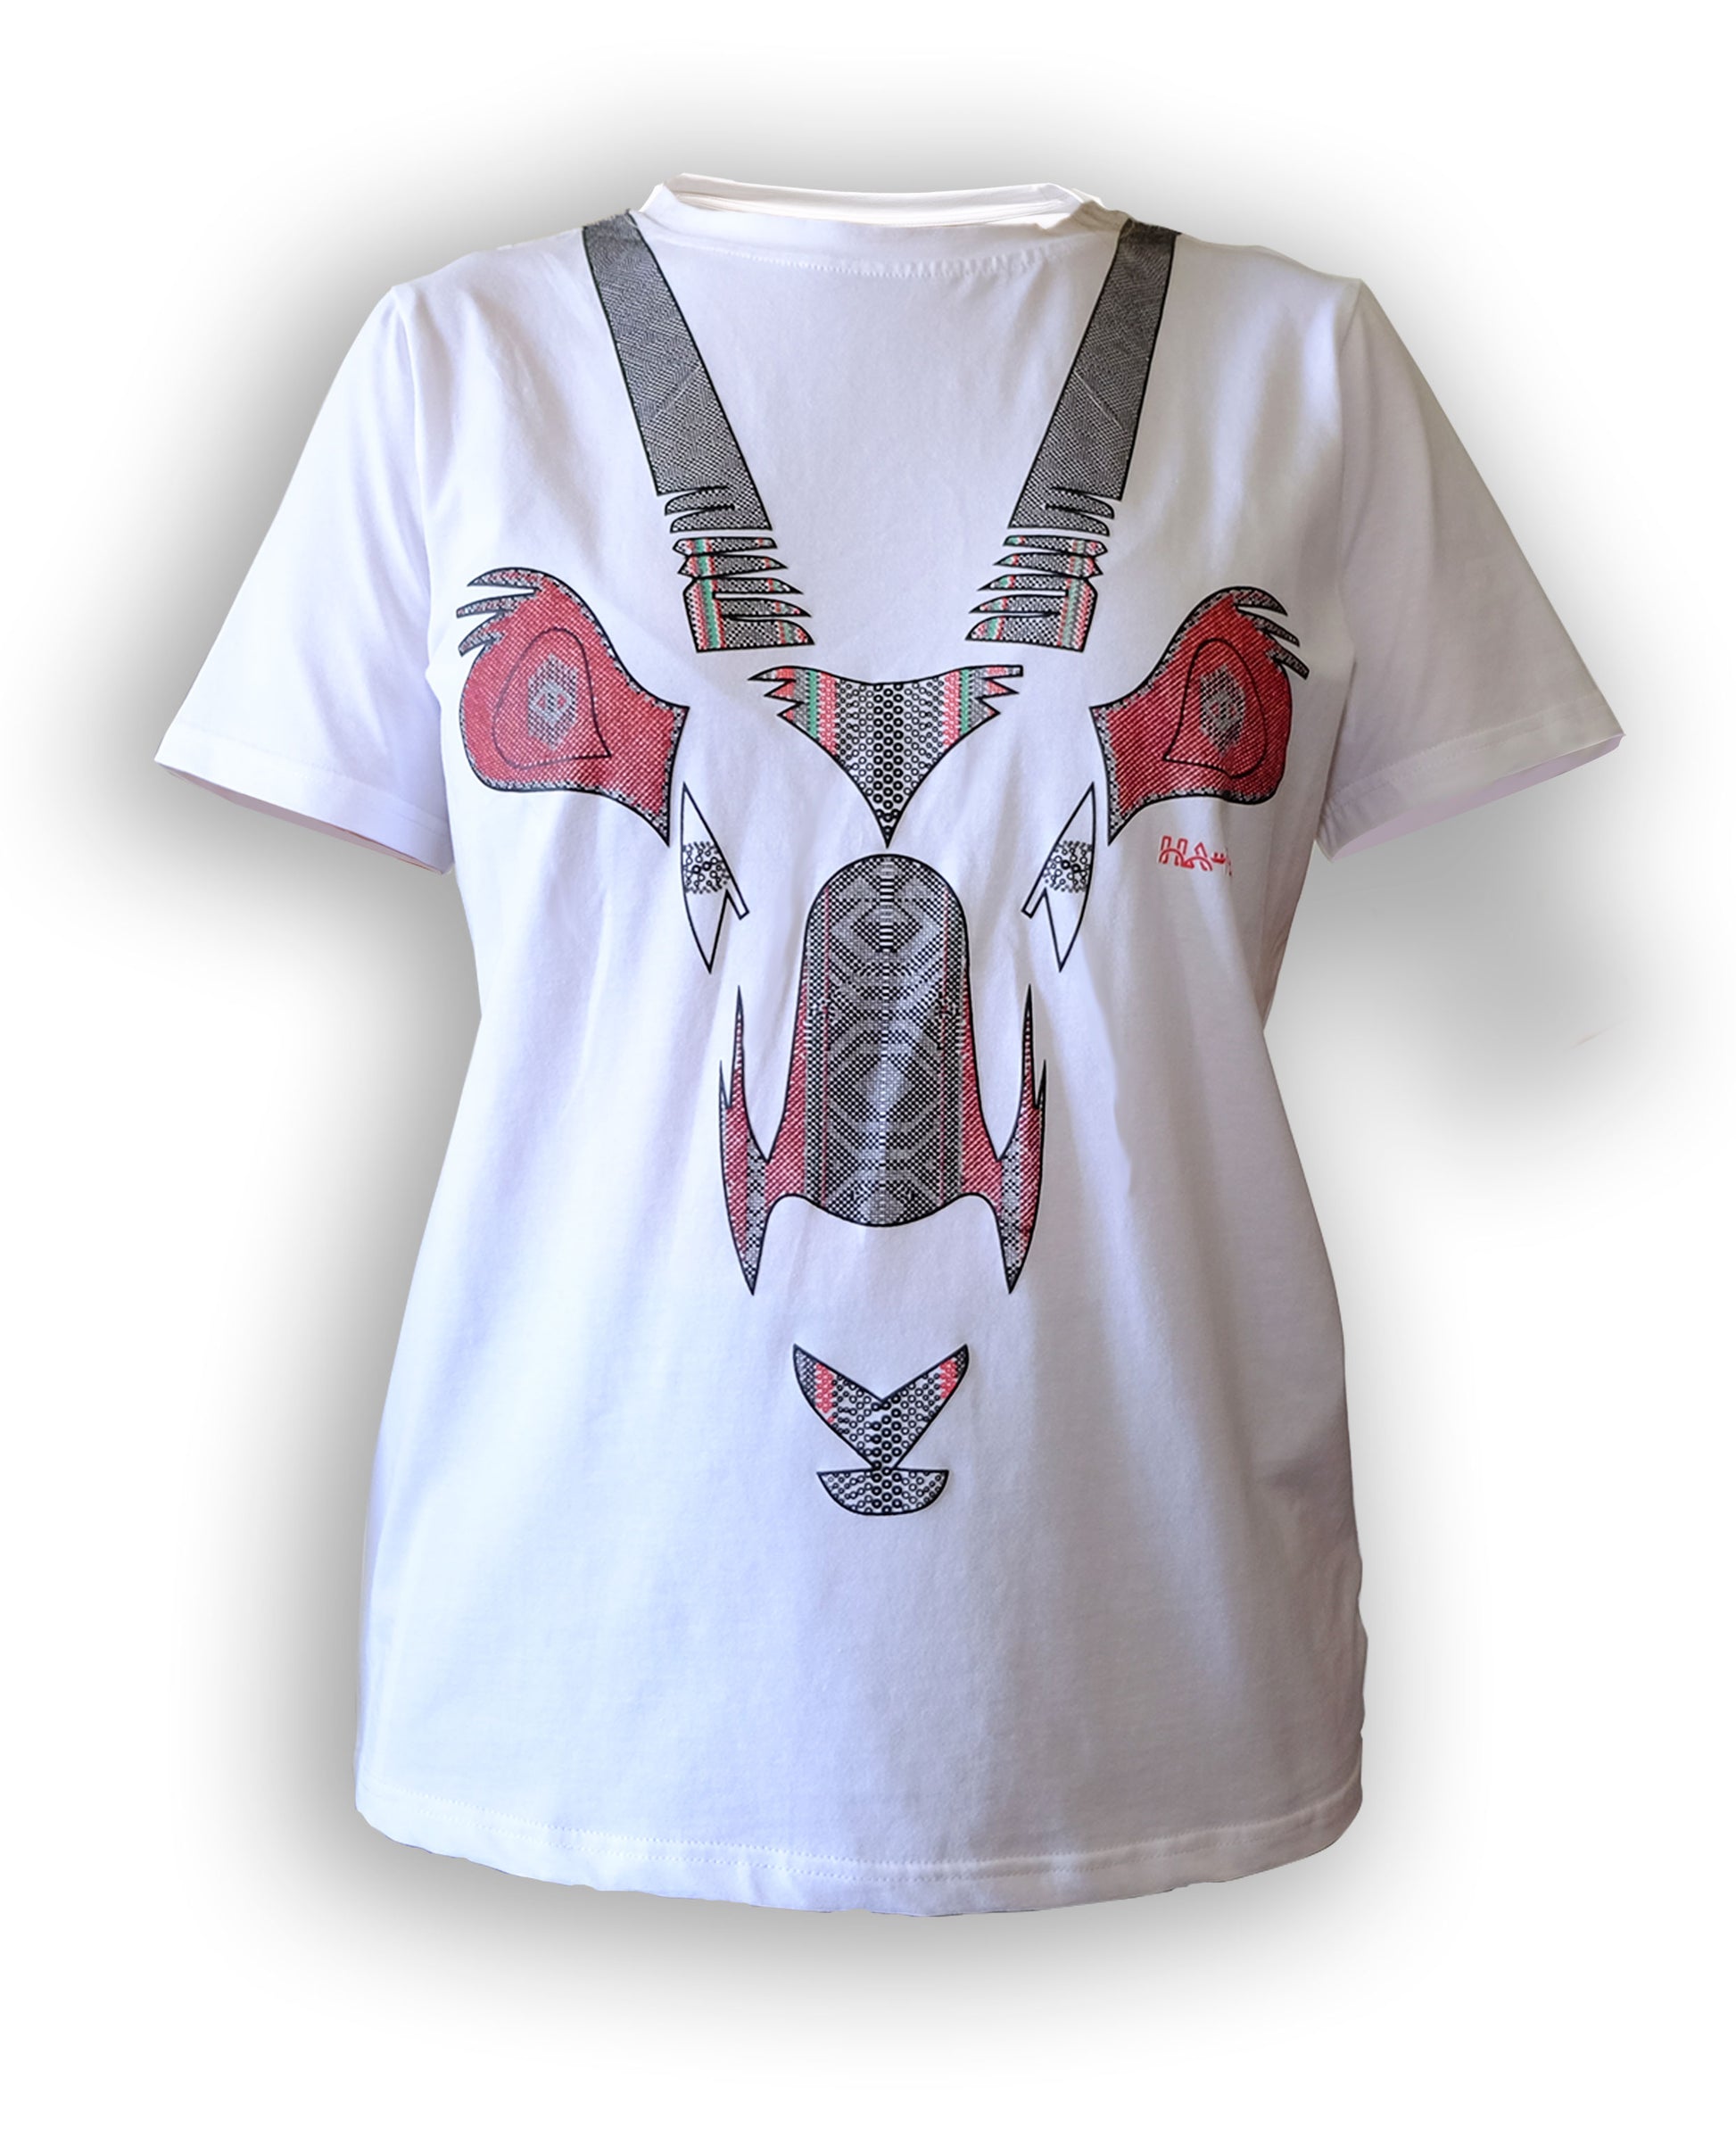 Oryx, T-shirt, Dubai, UAE, Abu Dhabi, woman, responsible fashion, designer, Emirates nature, WWF, cool, front